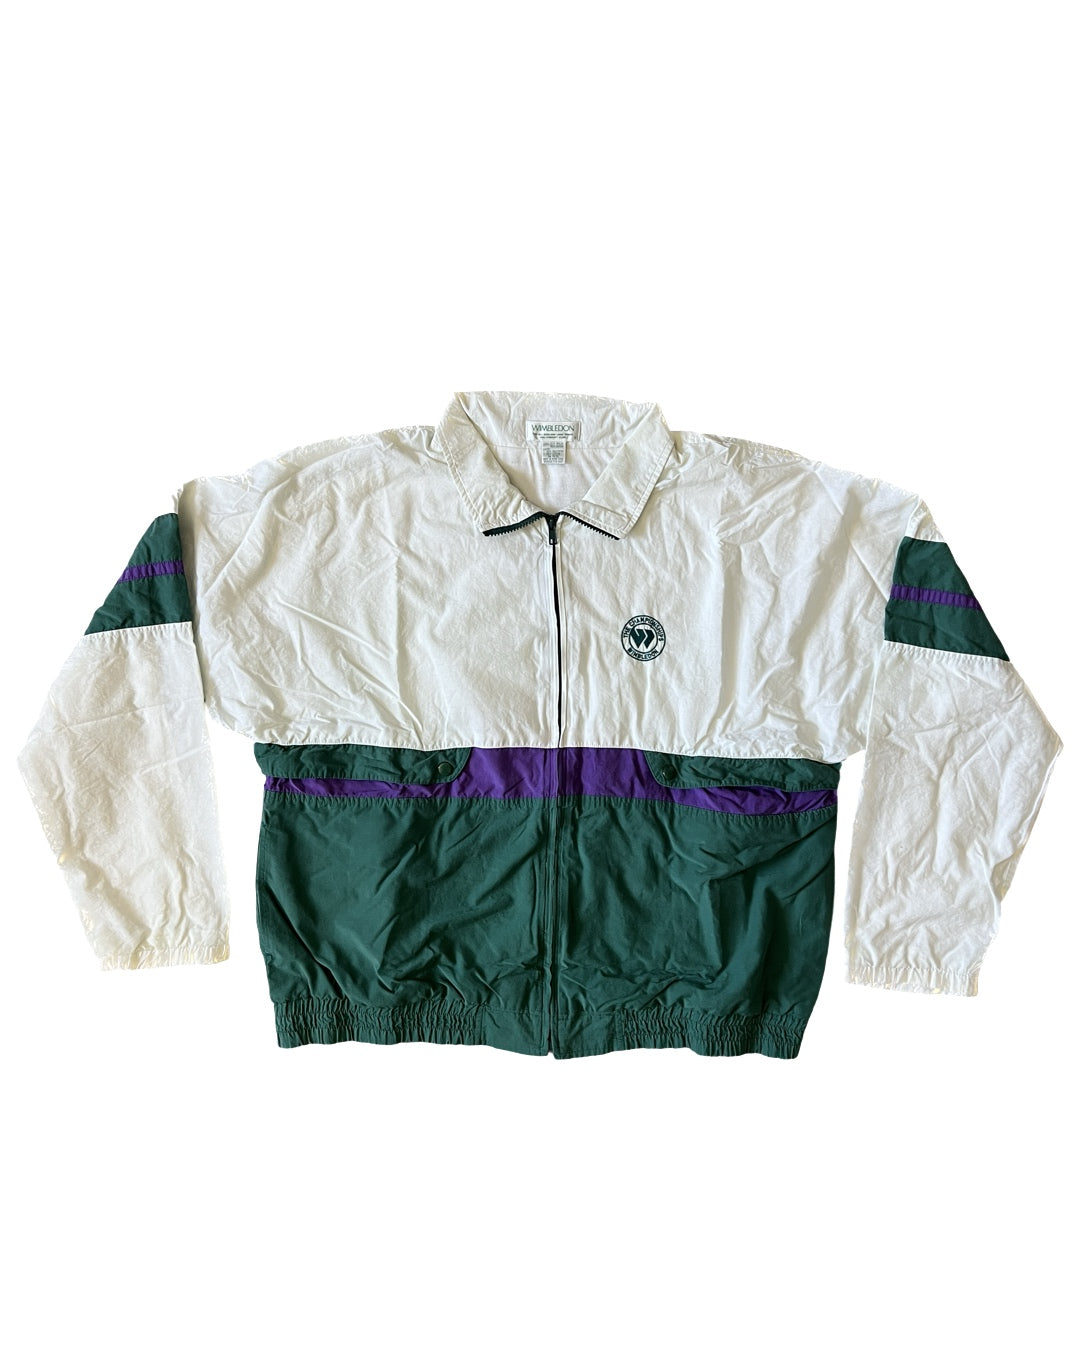 Vintage Wimbledon Tennis Jacket (circa 1990s)